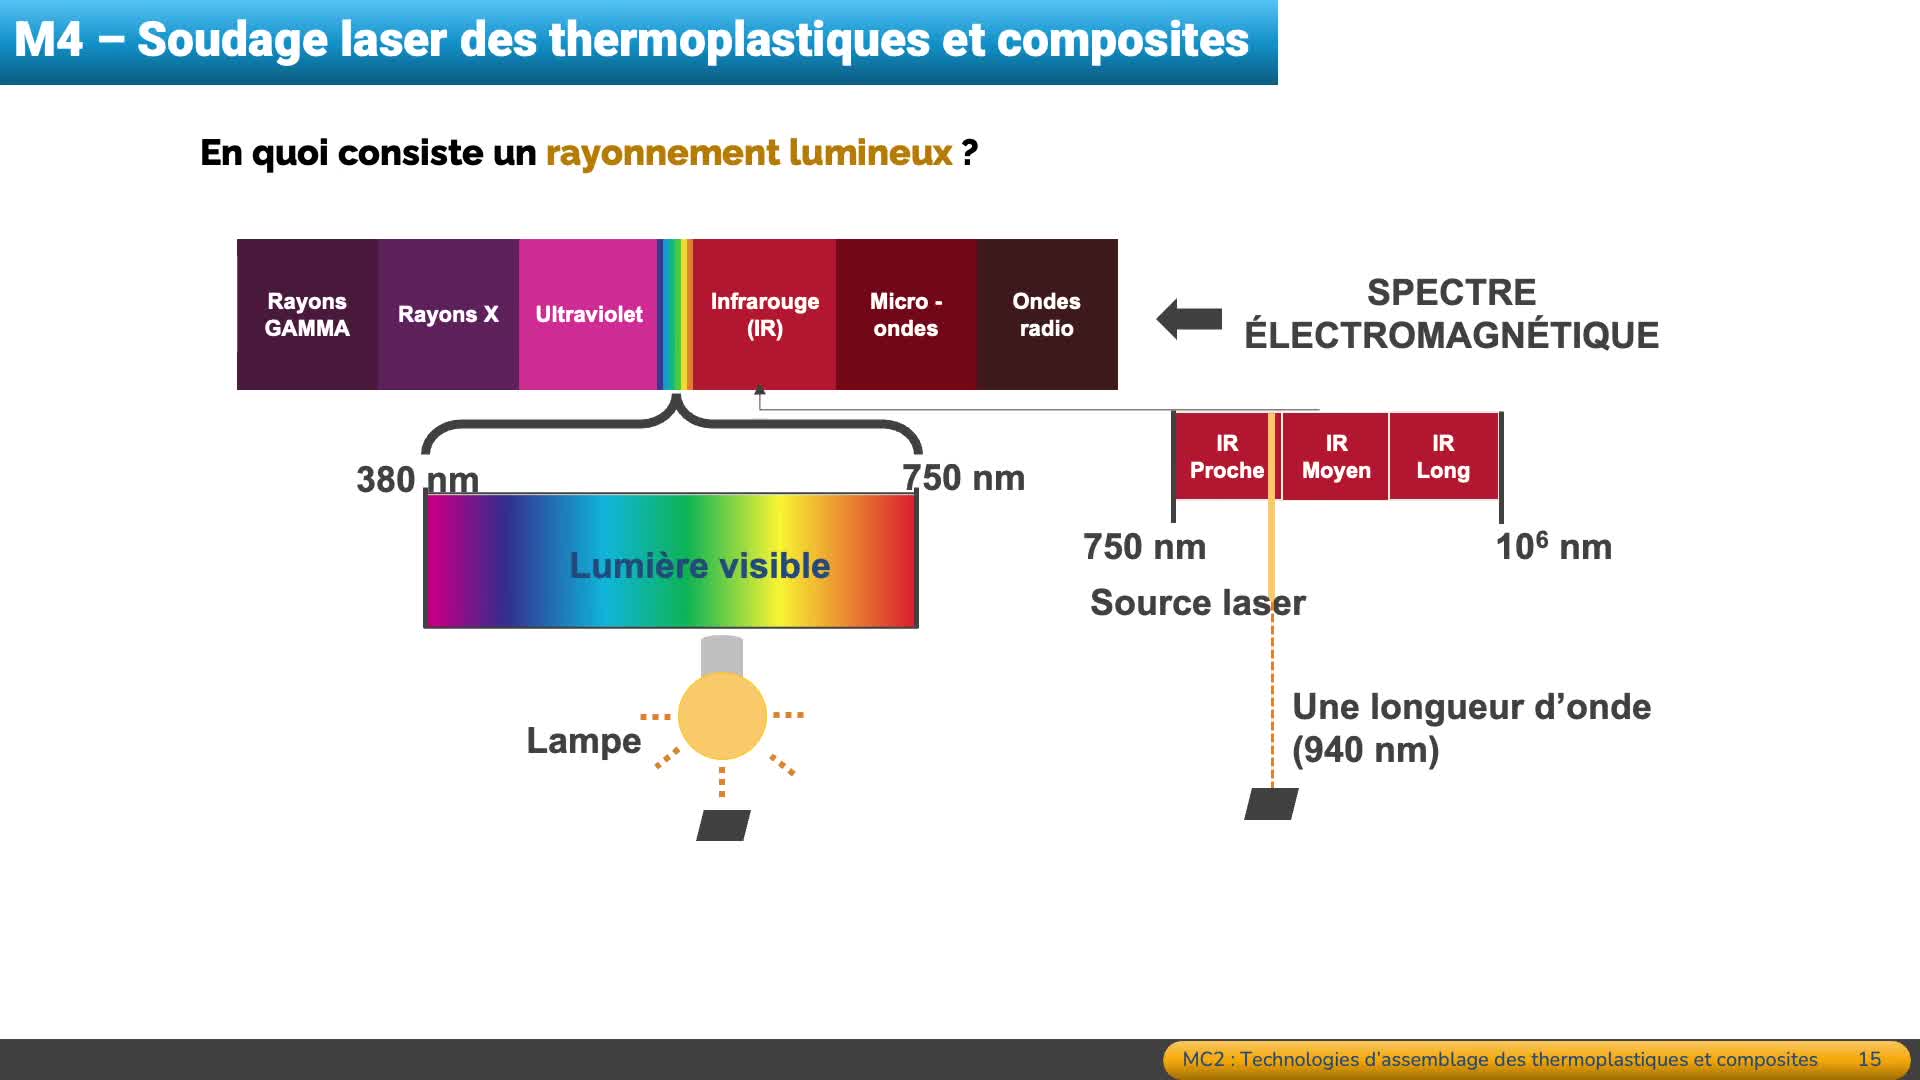 mc2-technologies-assemblage-thermoplastiques-composites.mp4